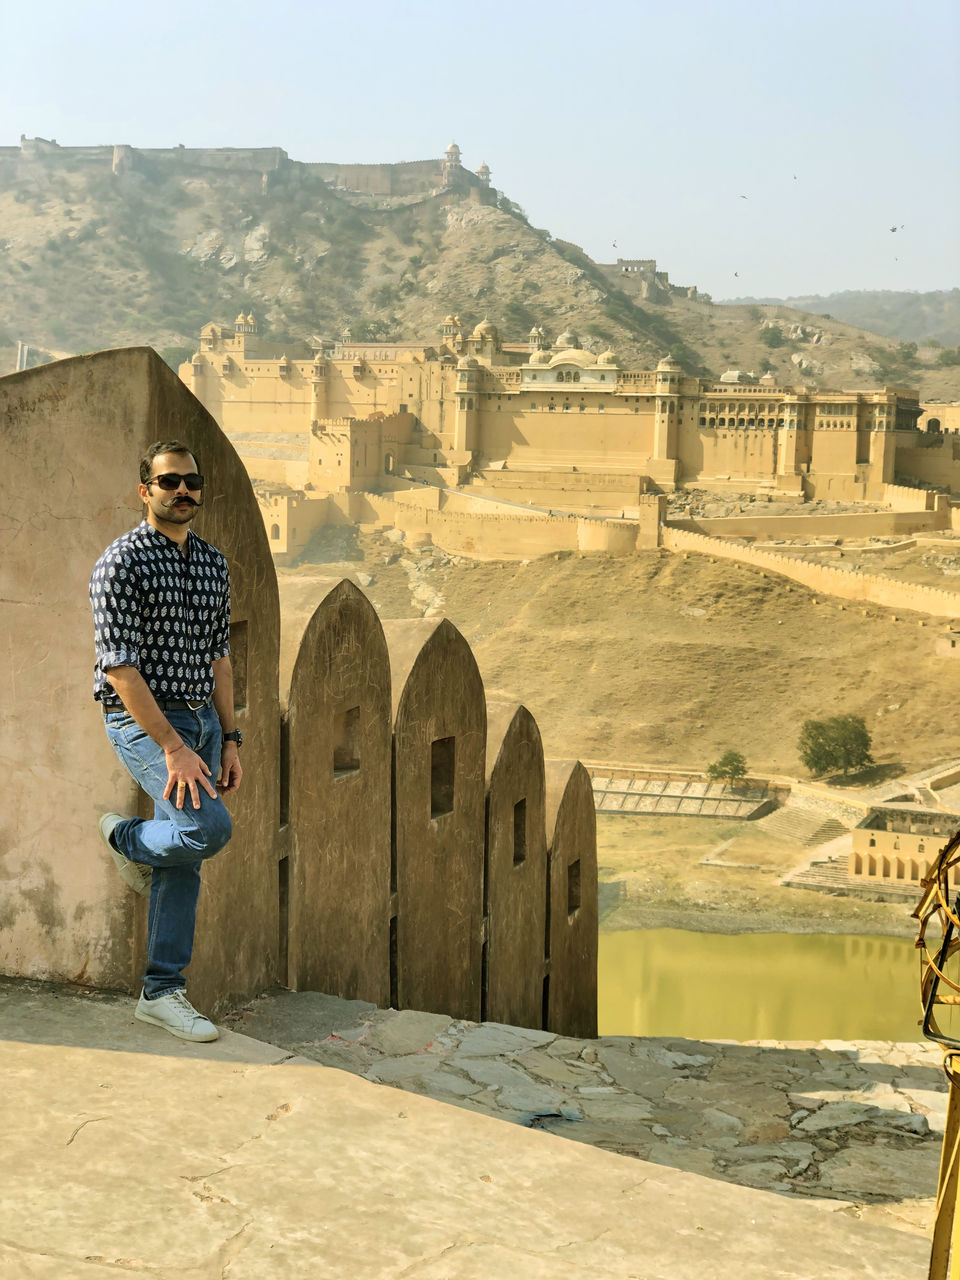 Photo of Amer Palace, Amer, Rajasthan by Abagfullofmaps